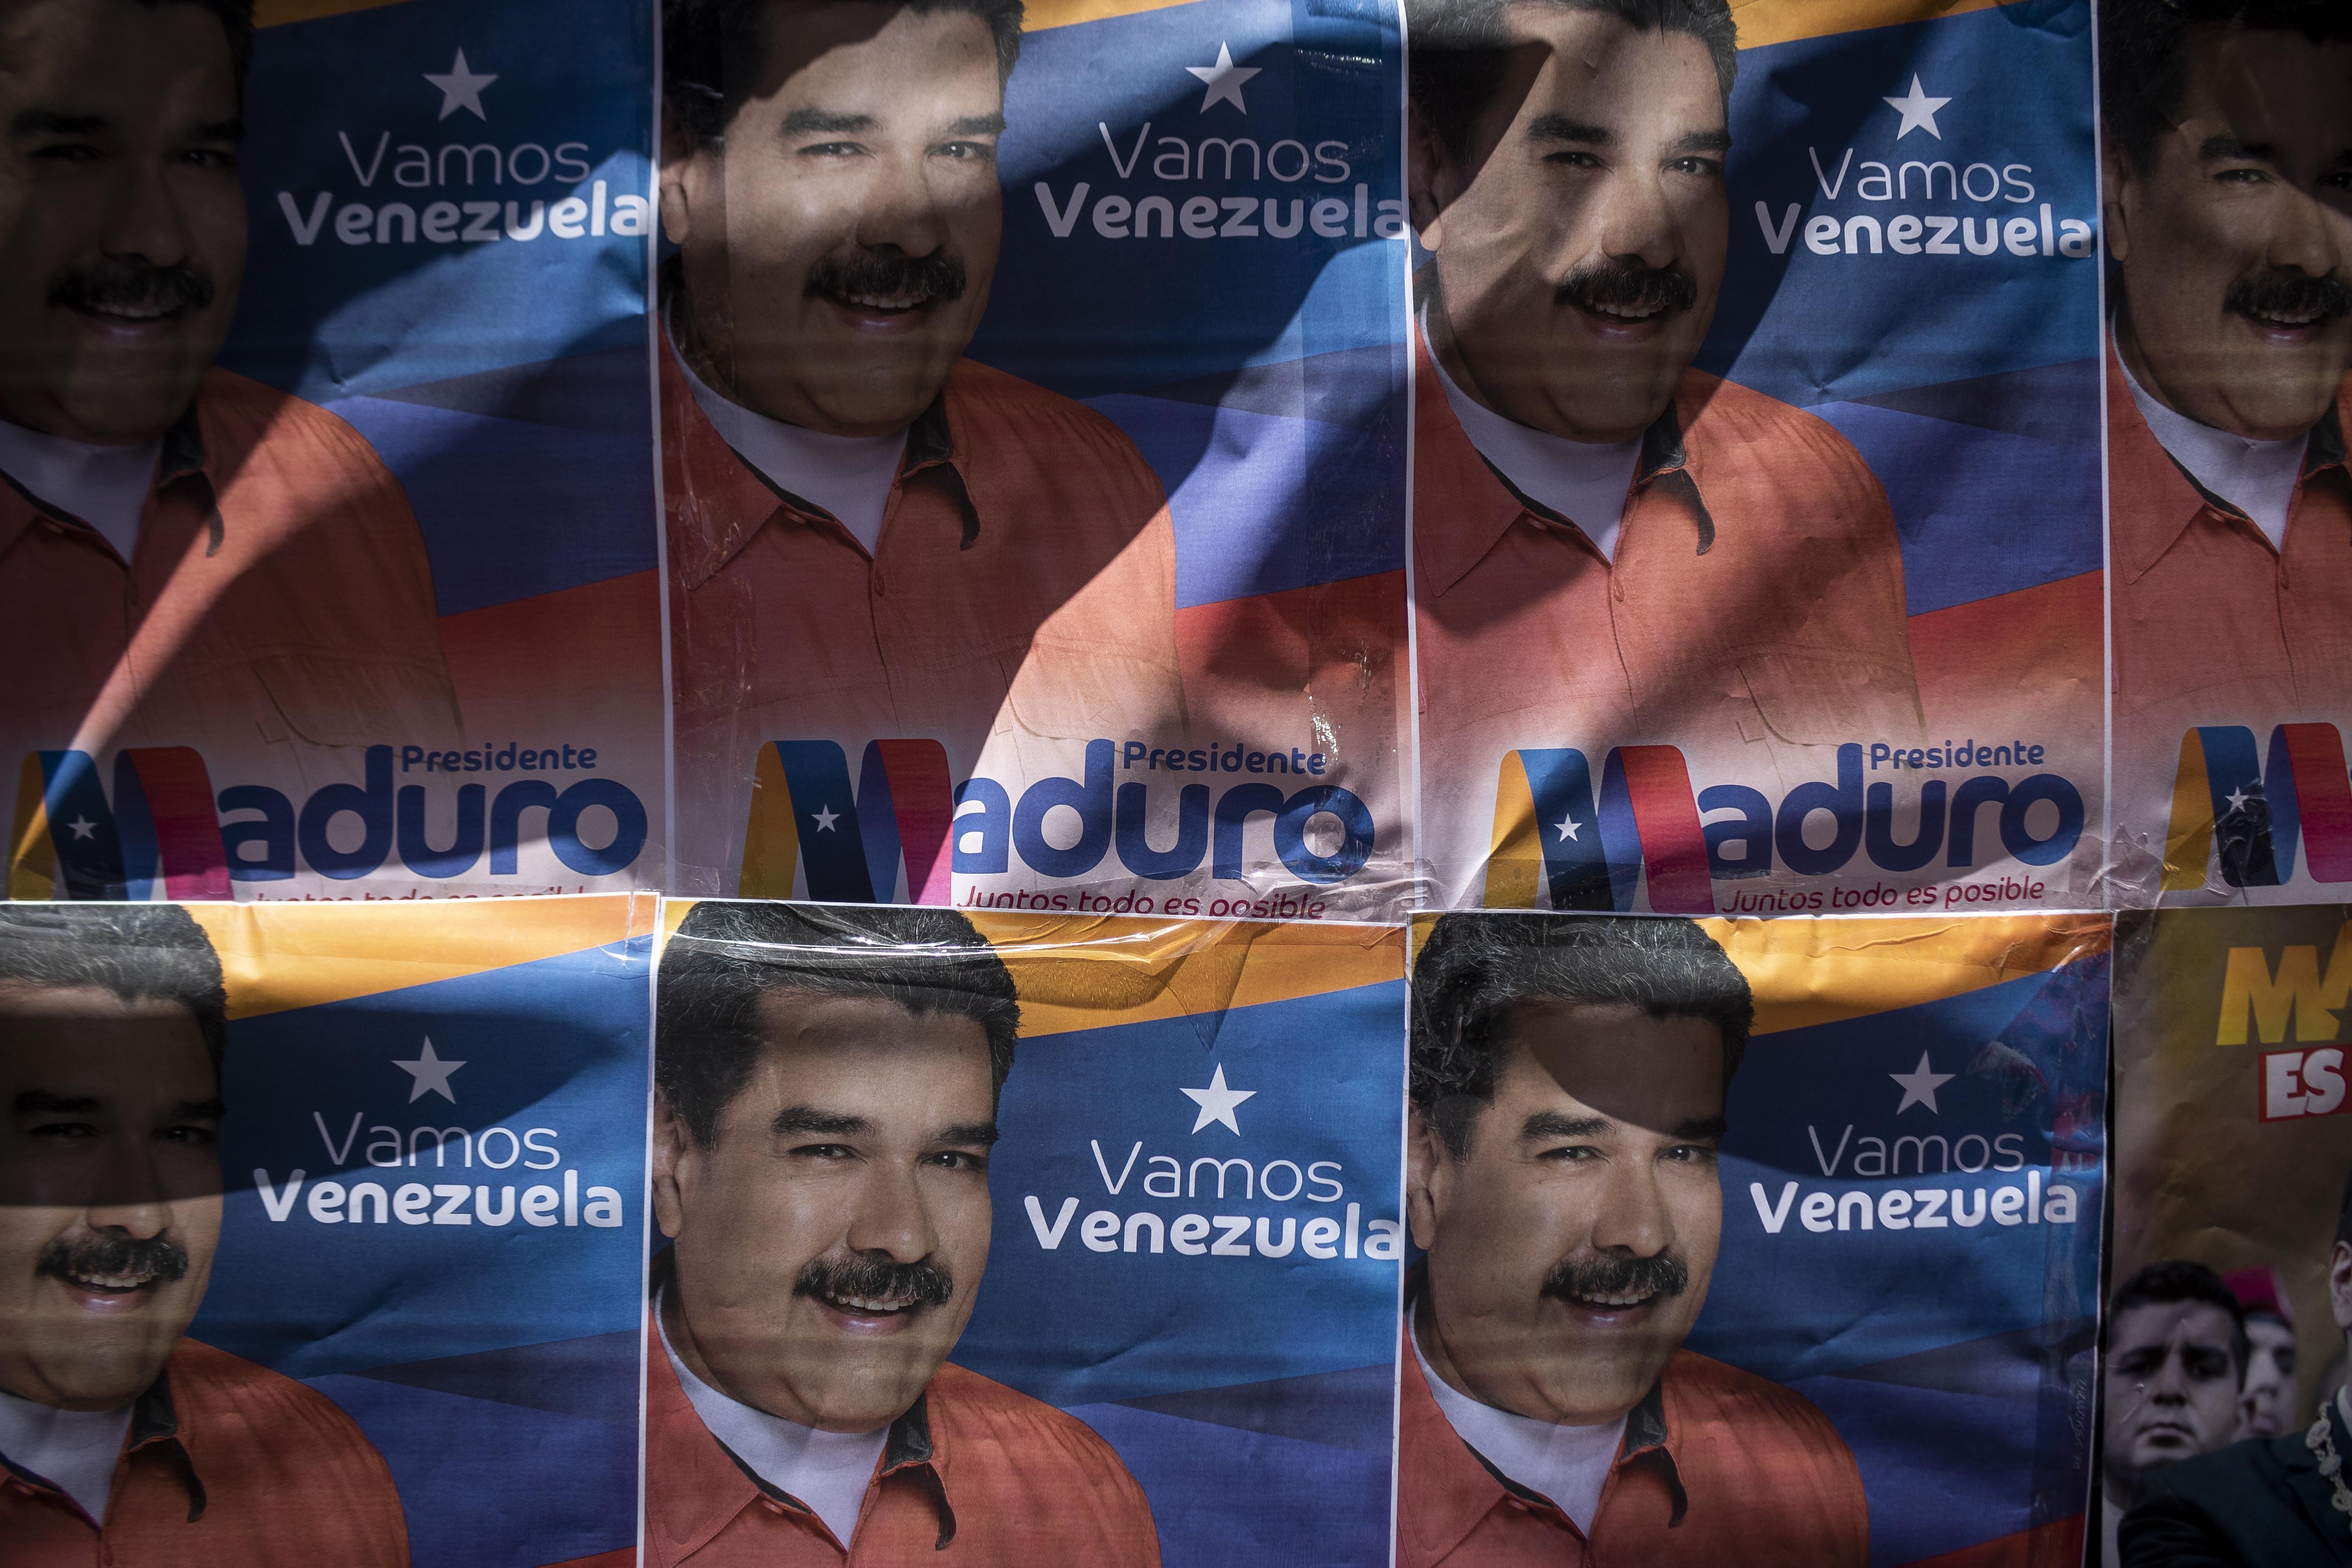 ‘Assassination attempt’ on Maduro